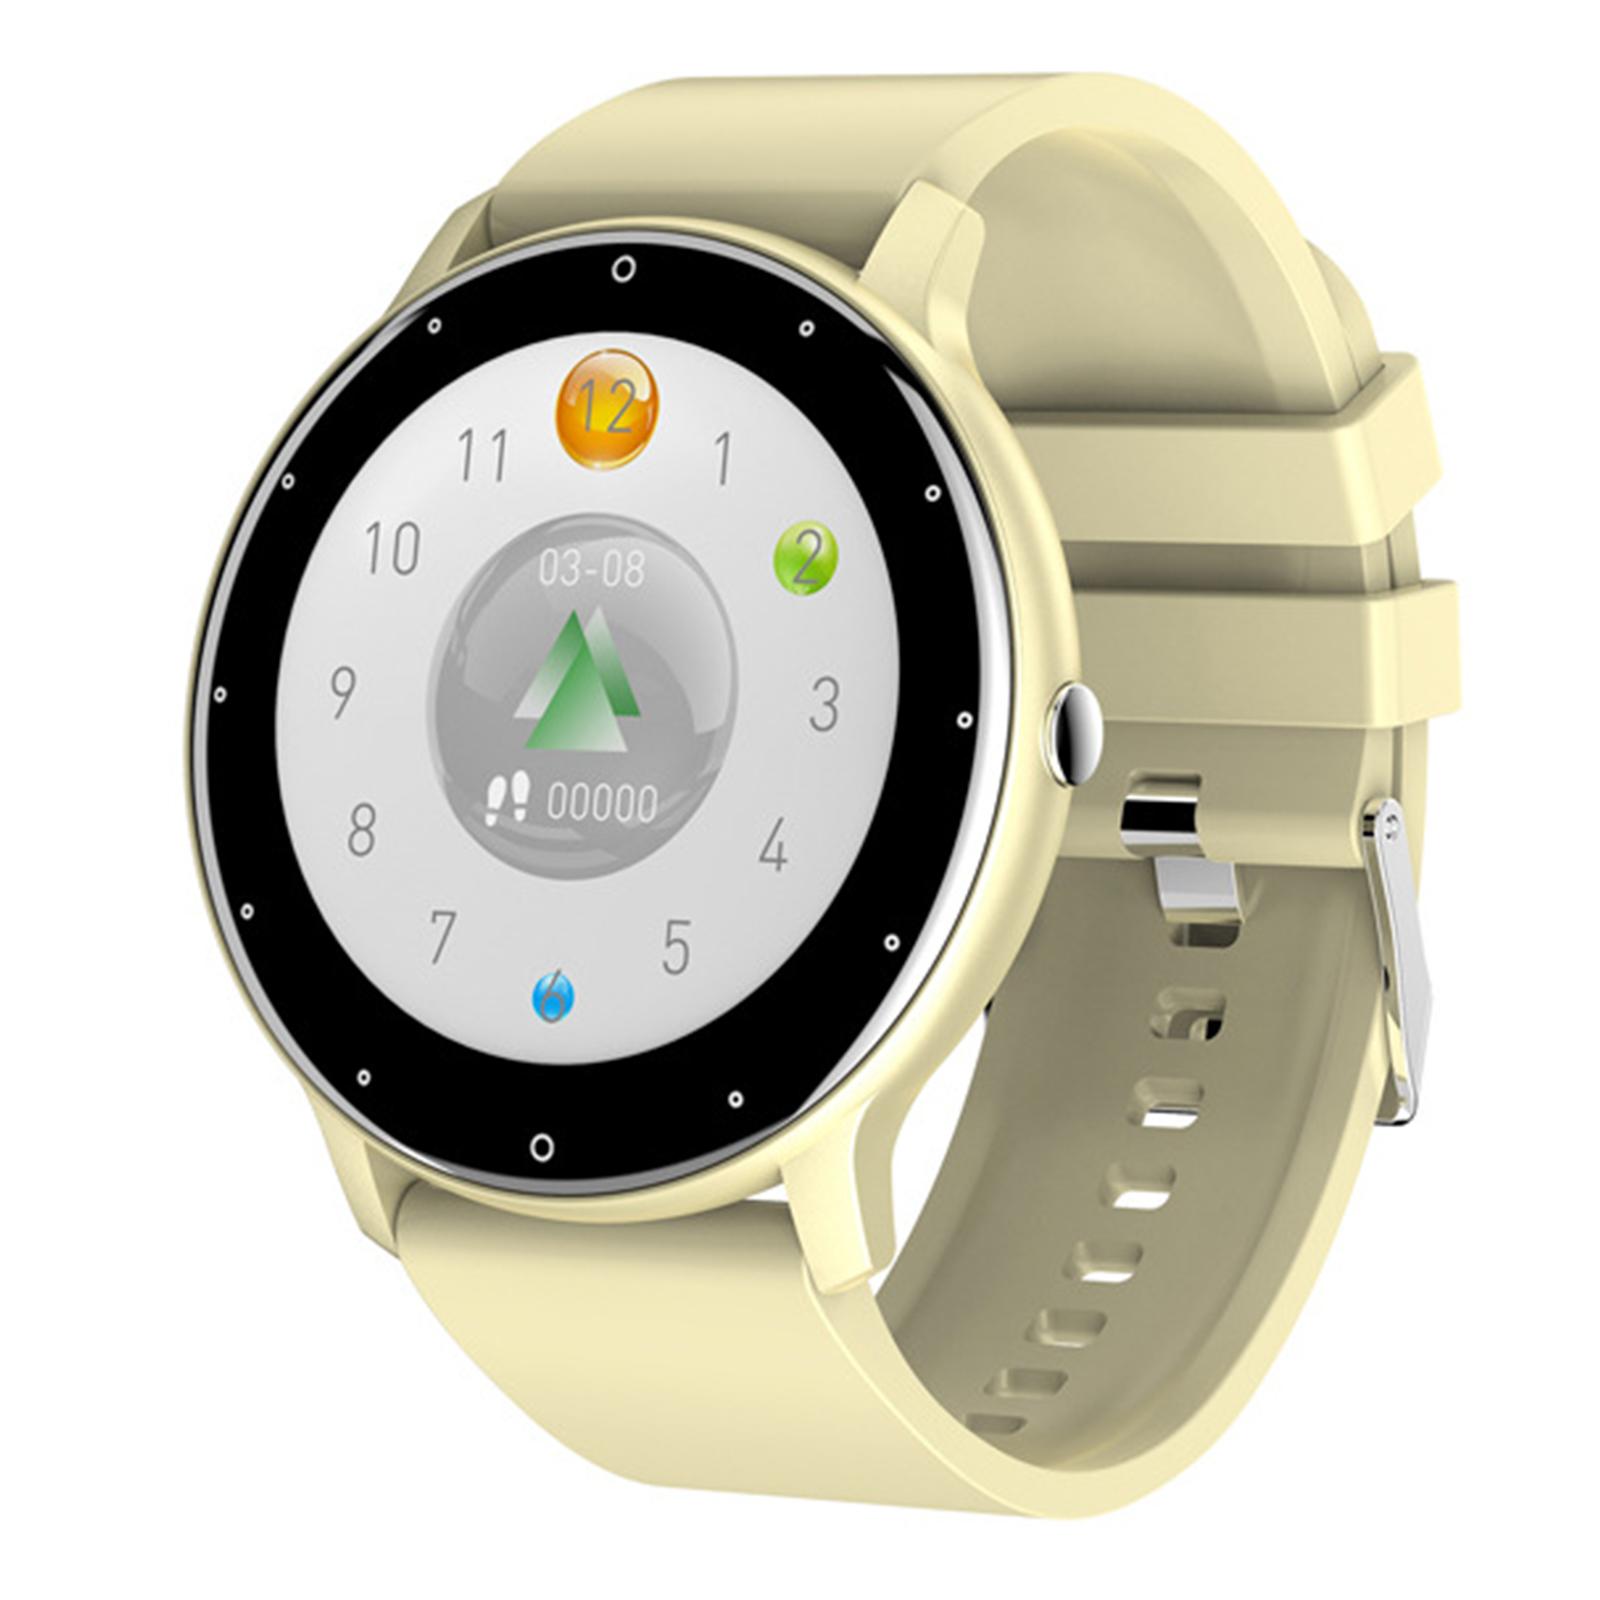 1.28 pollici Zl02D Smart Watch FitnessTracker conteggio passi cronometro Touchscreen polsino Bluetooth Smart Watch per Android iOS: Yellow